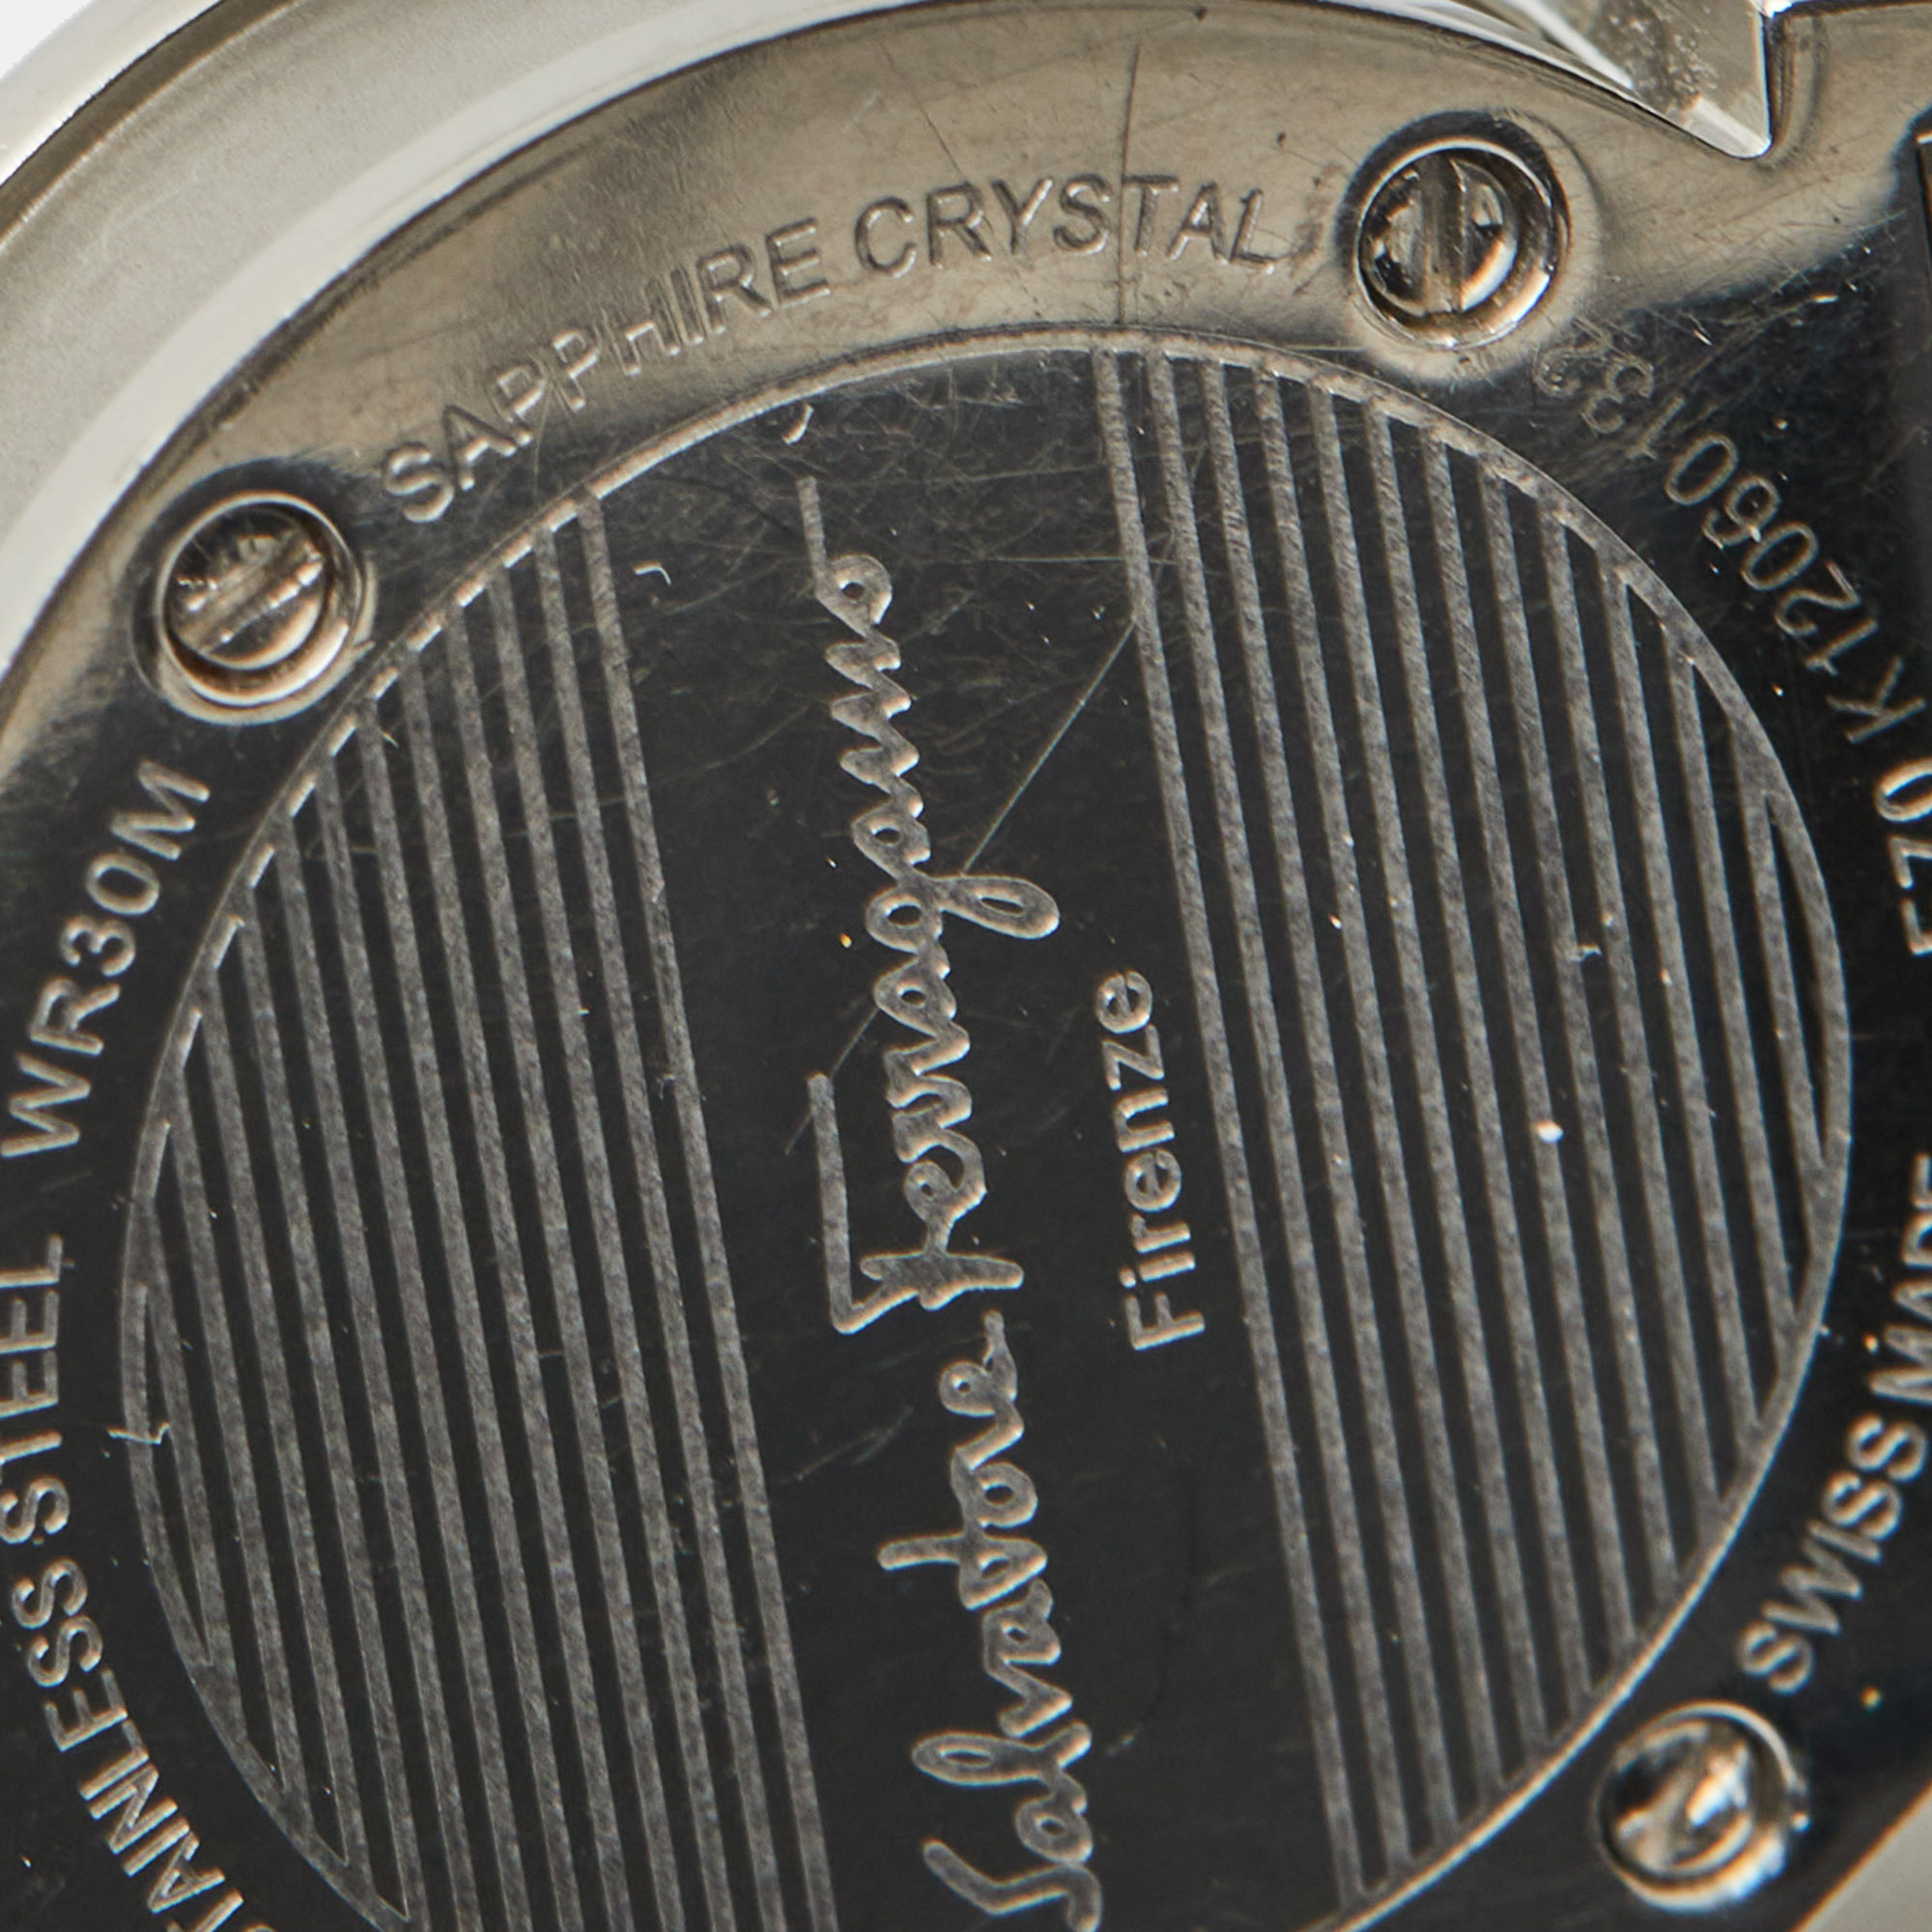 Salvatore Ferragamo Mother Of Pearl Stainless Steel F70 Women's Wristwatch 24 Mm